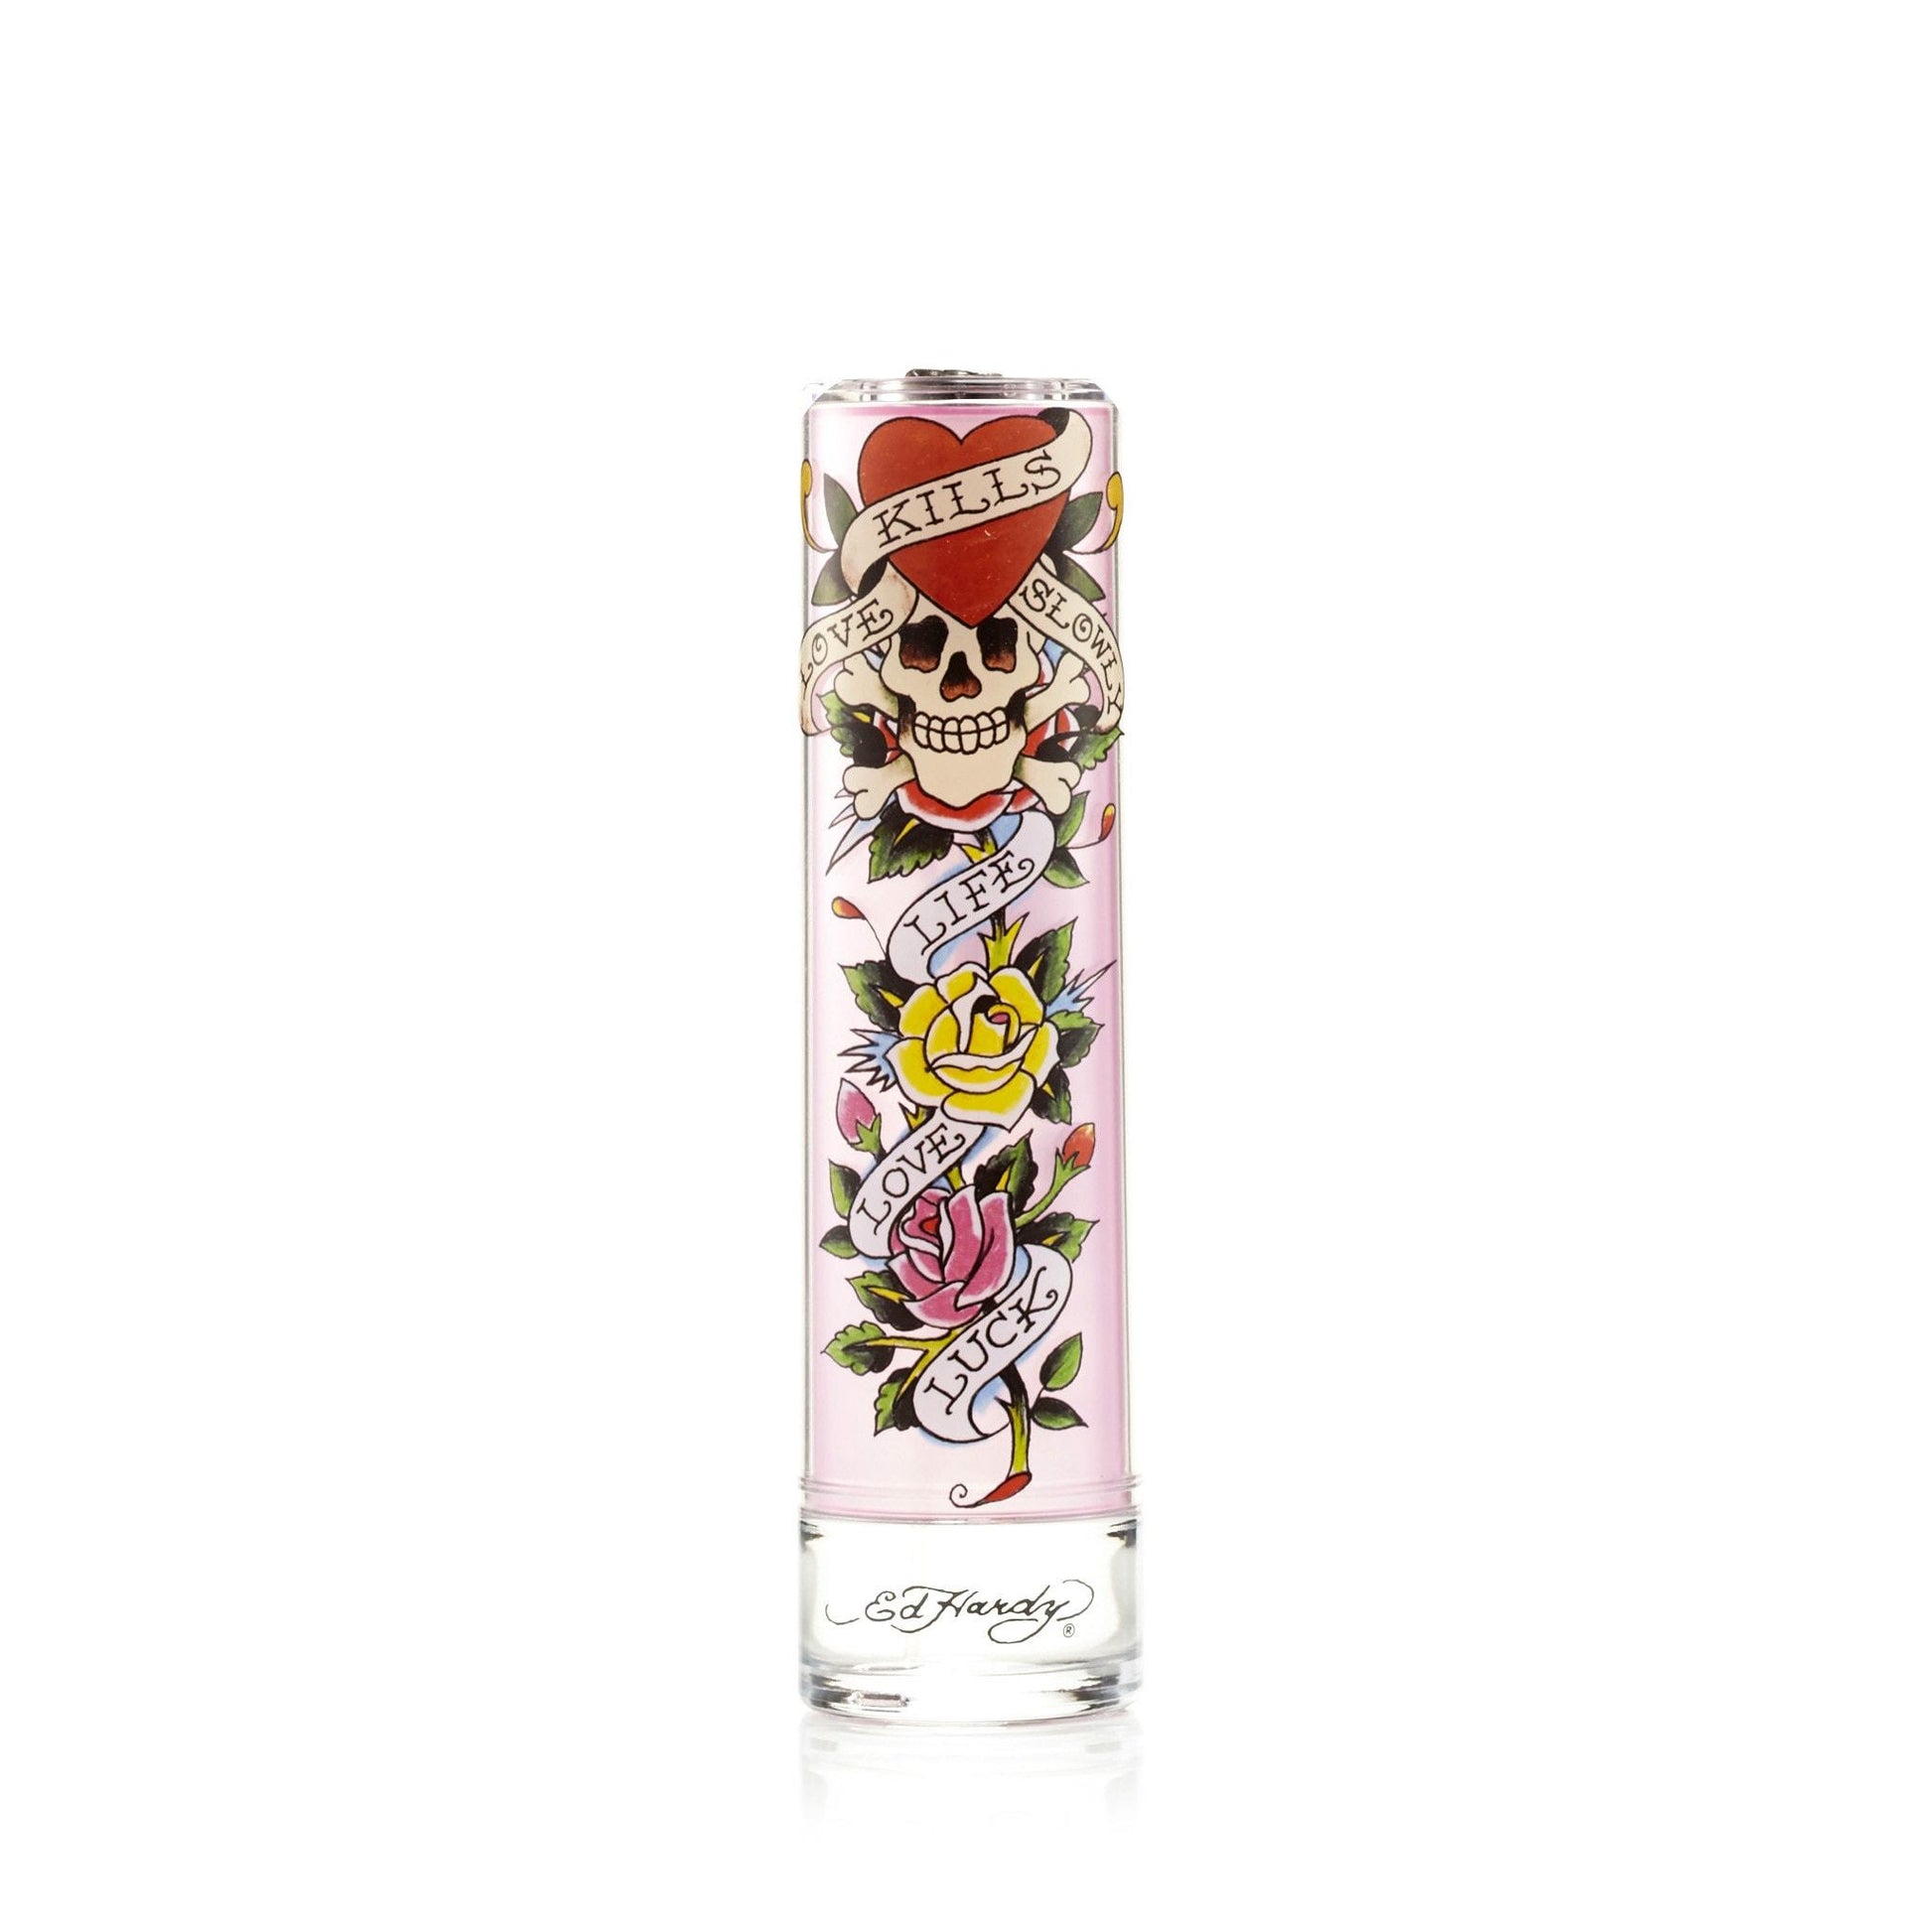 Ed Hardy Eau de Parfum Spray for Women by Christian Audigier, Product image 3